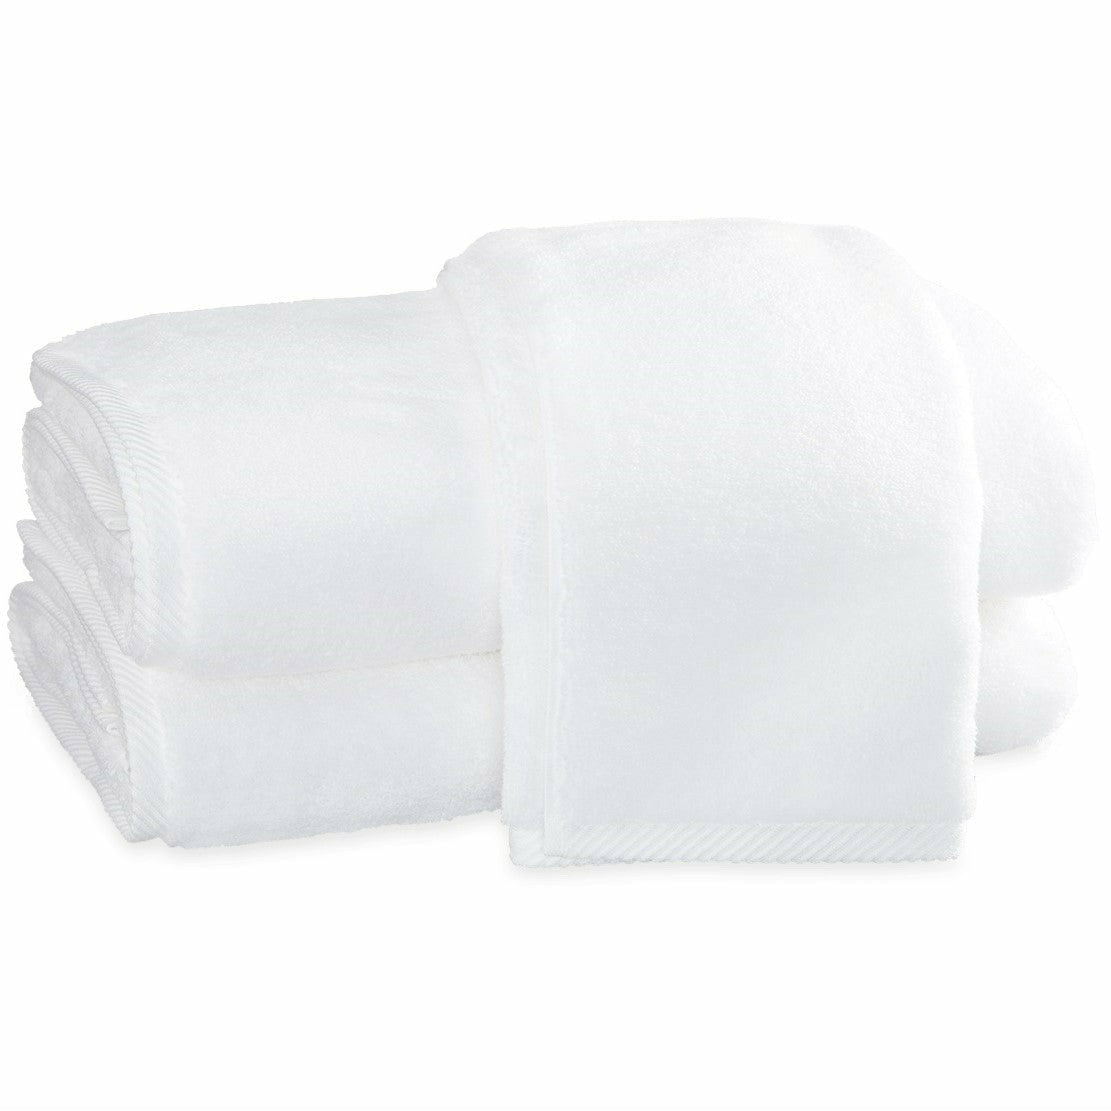 Openook Supima Cotton Bath Towel - White